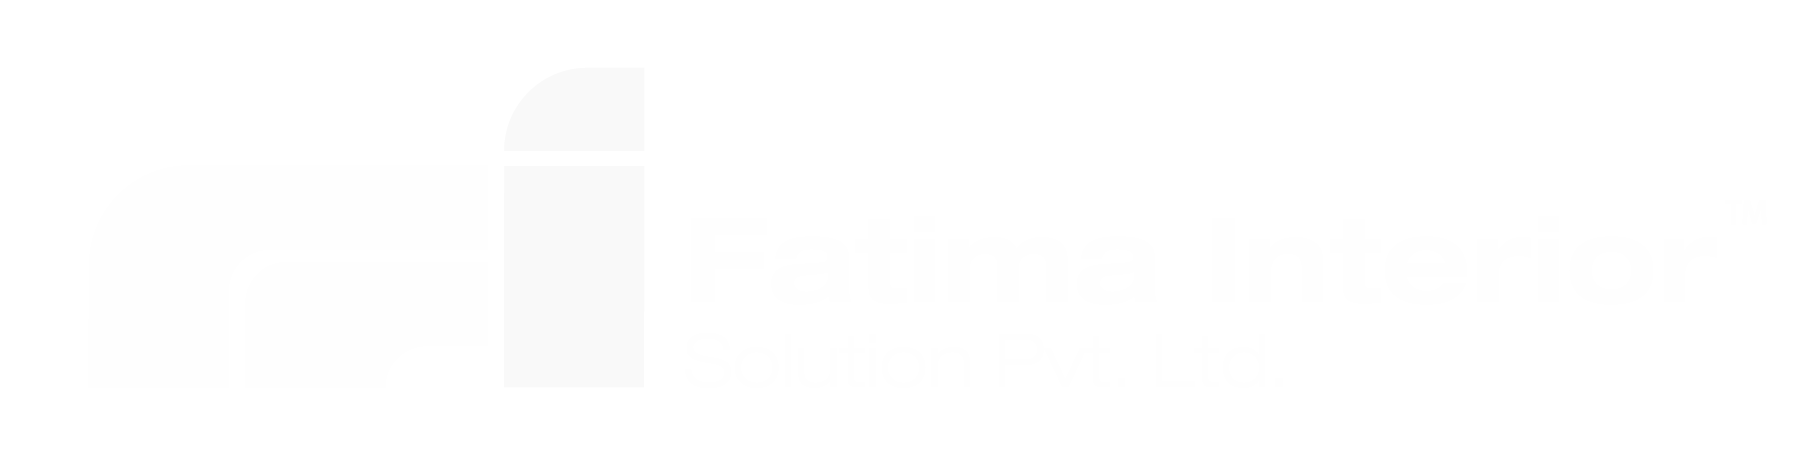 Fatima Interior Solution